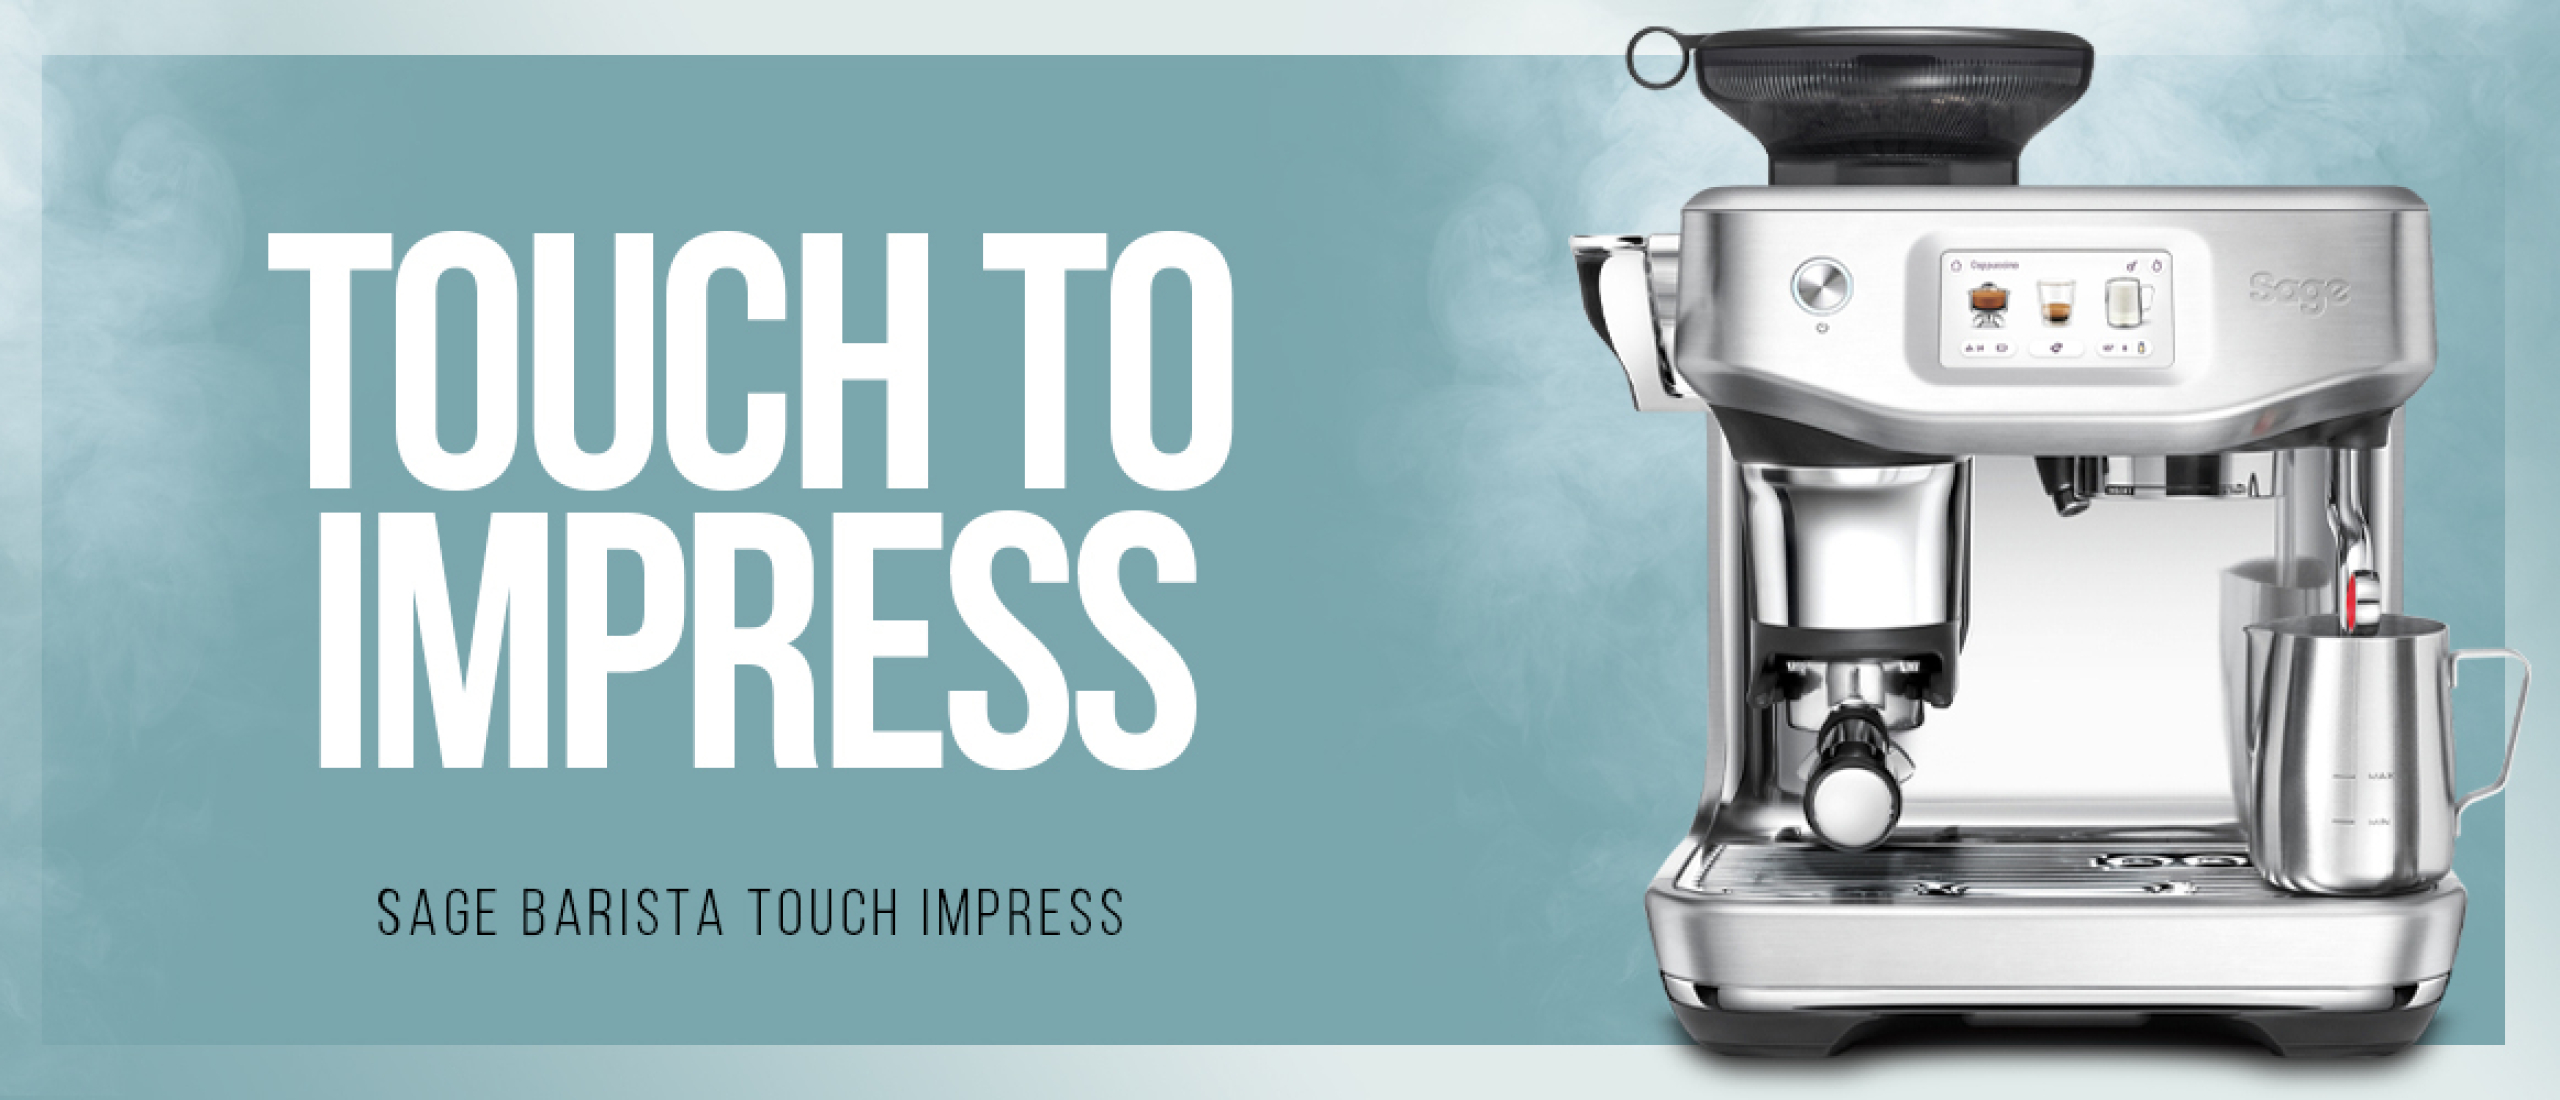 Sage Barista Touch Impress, een impressionante bean to cup espressomachine